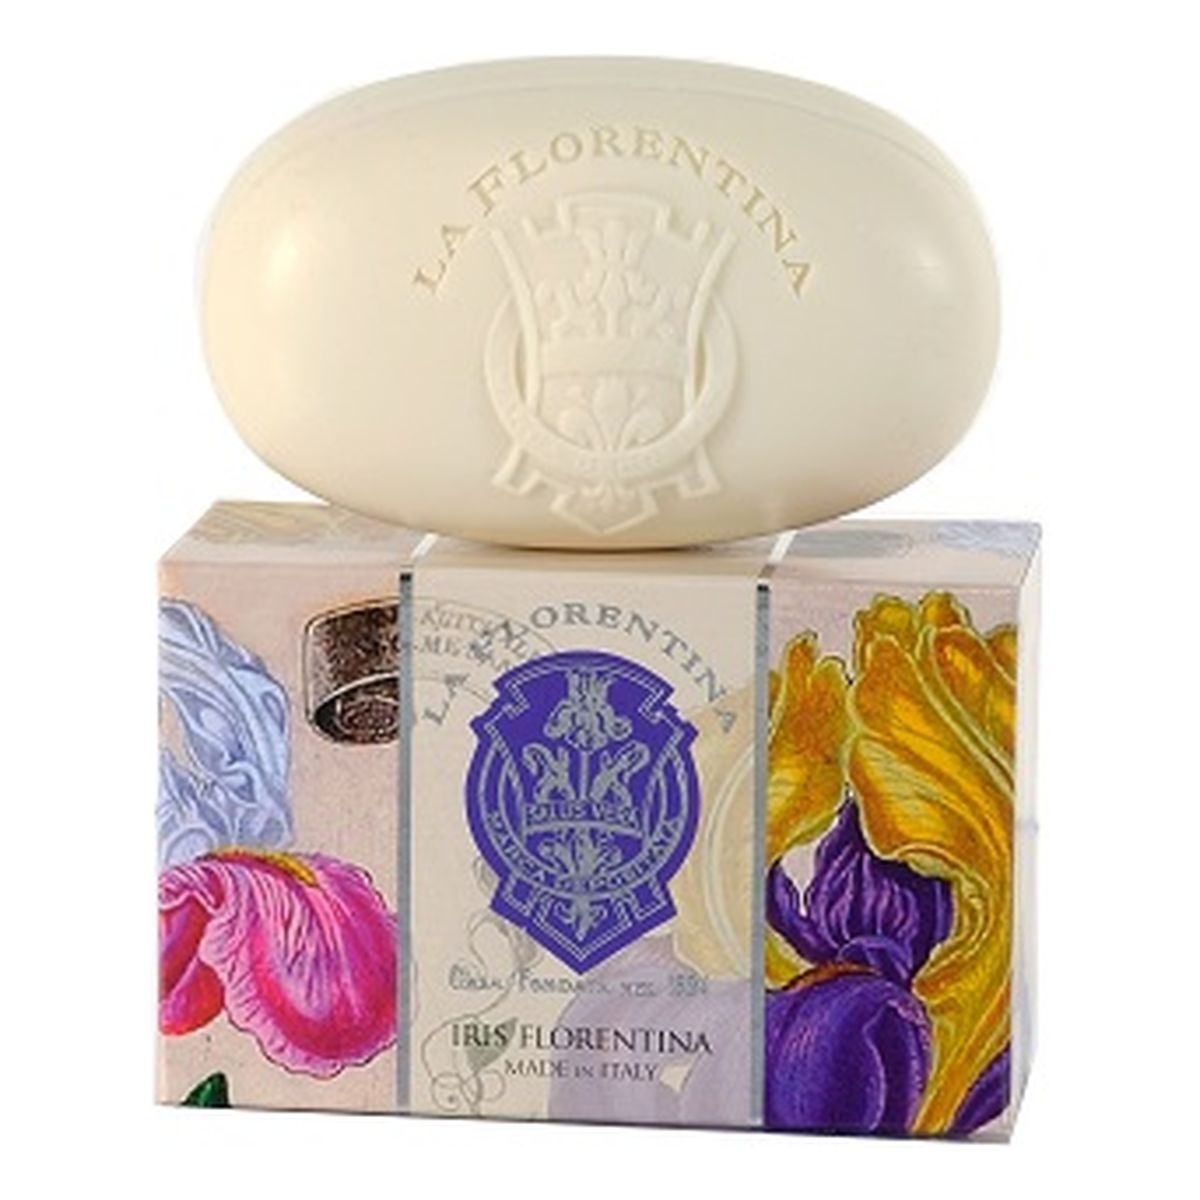 La Florentina Bath Soap mydło do kąpieli Florentina Iris 300g